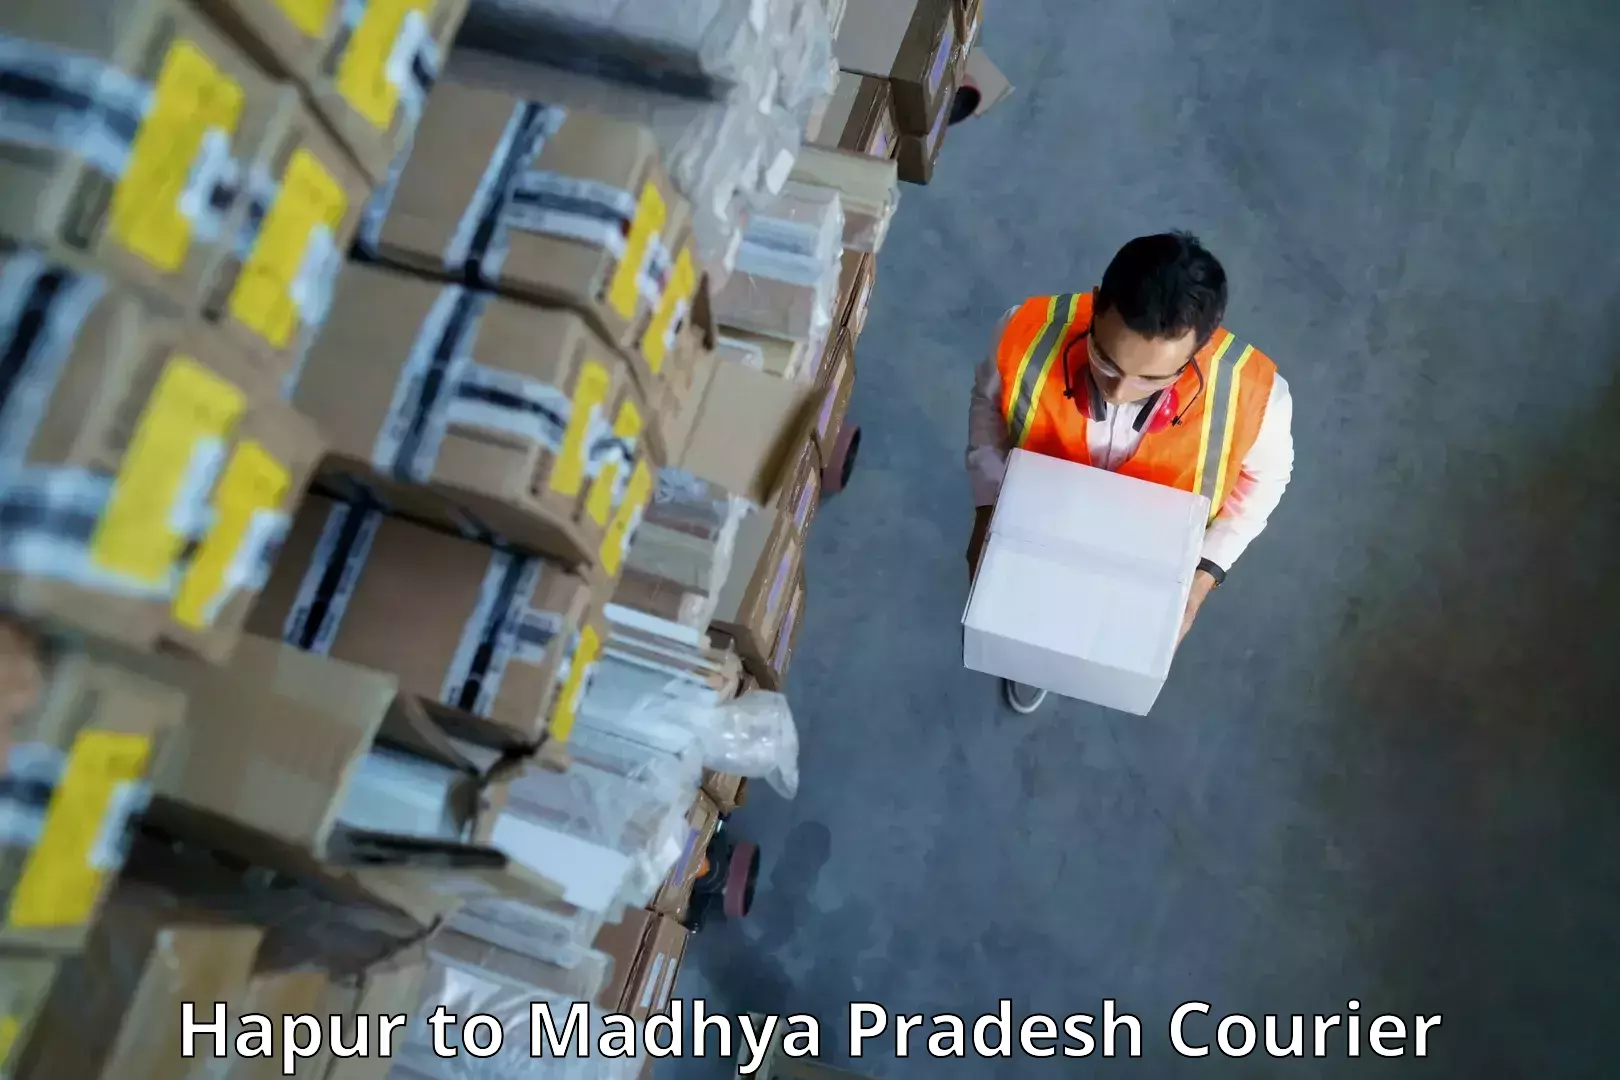 Professional courier handling Hapur to Madhya Pradesh